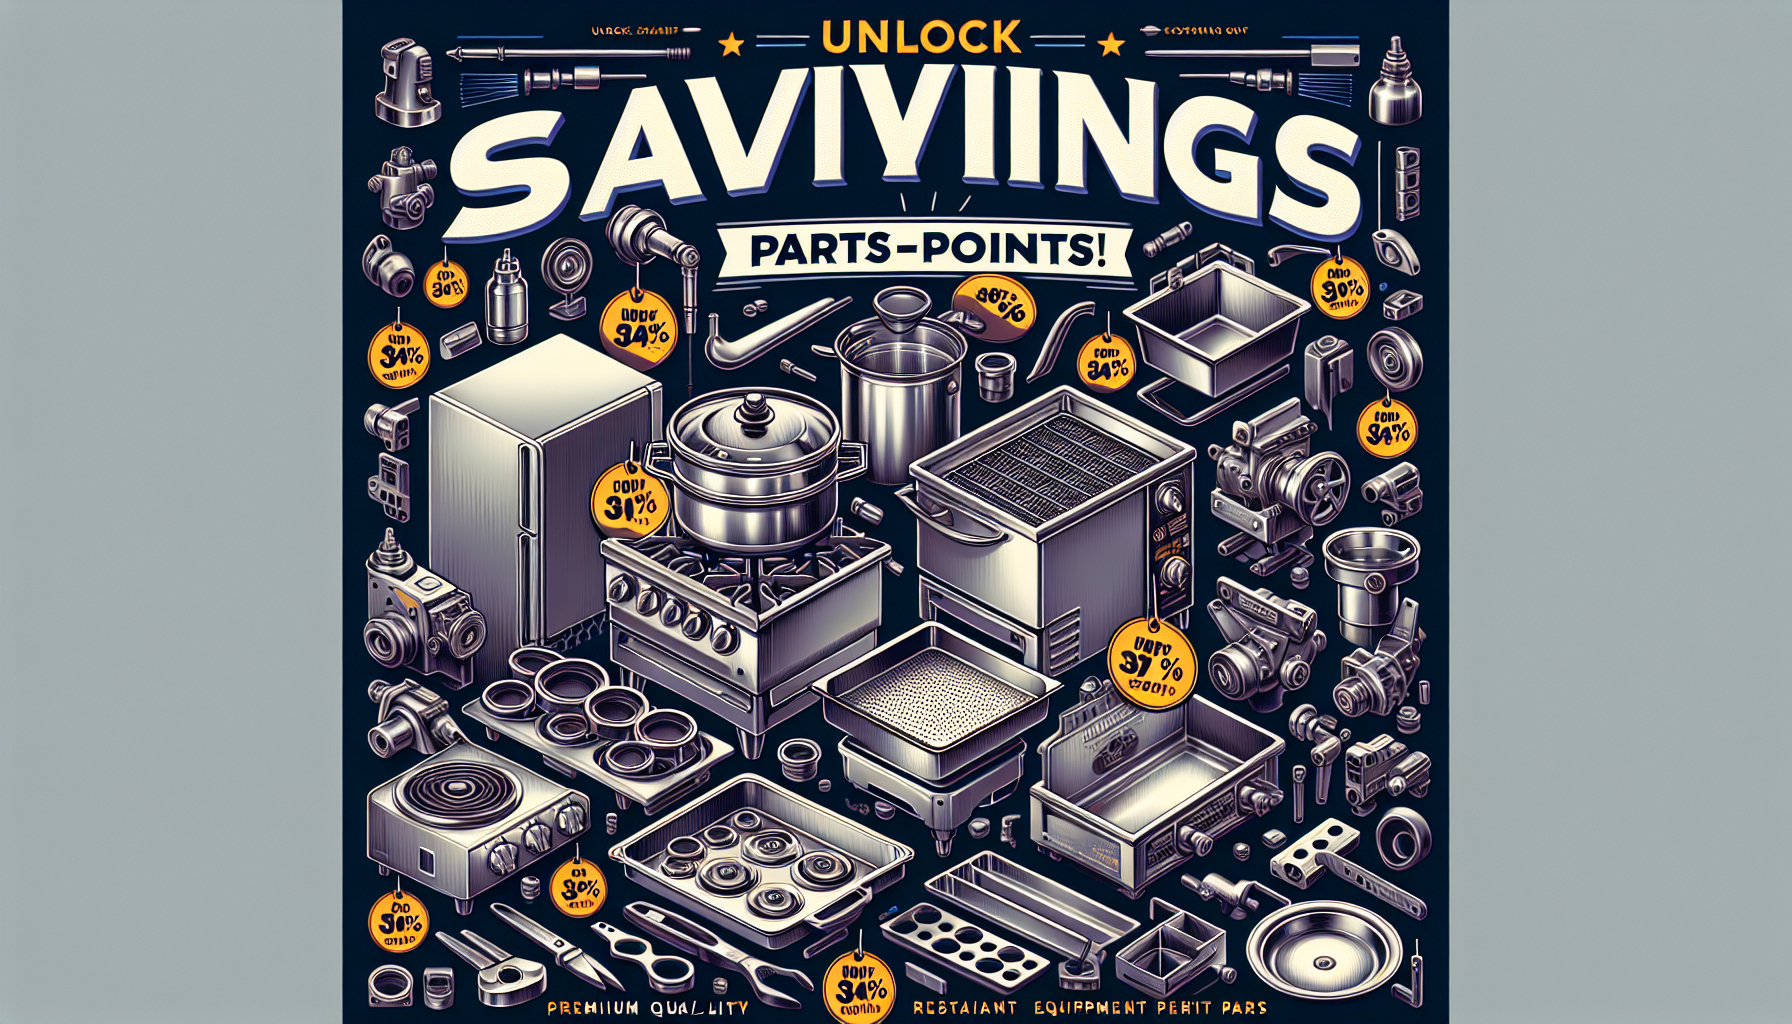 Unlock Savings on Premium Restaurant Equipment Parts with Parts-Points!